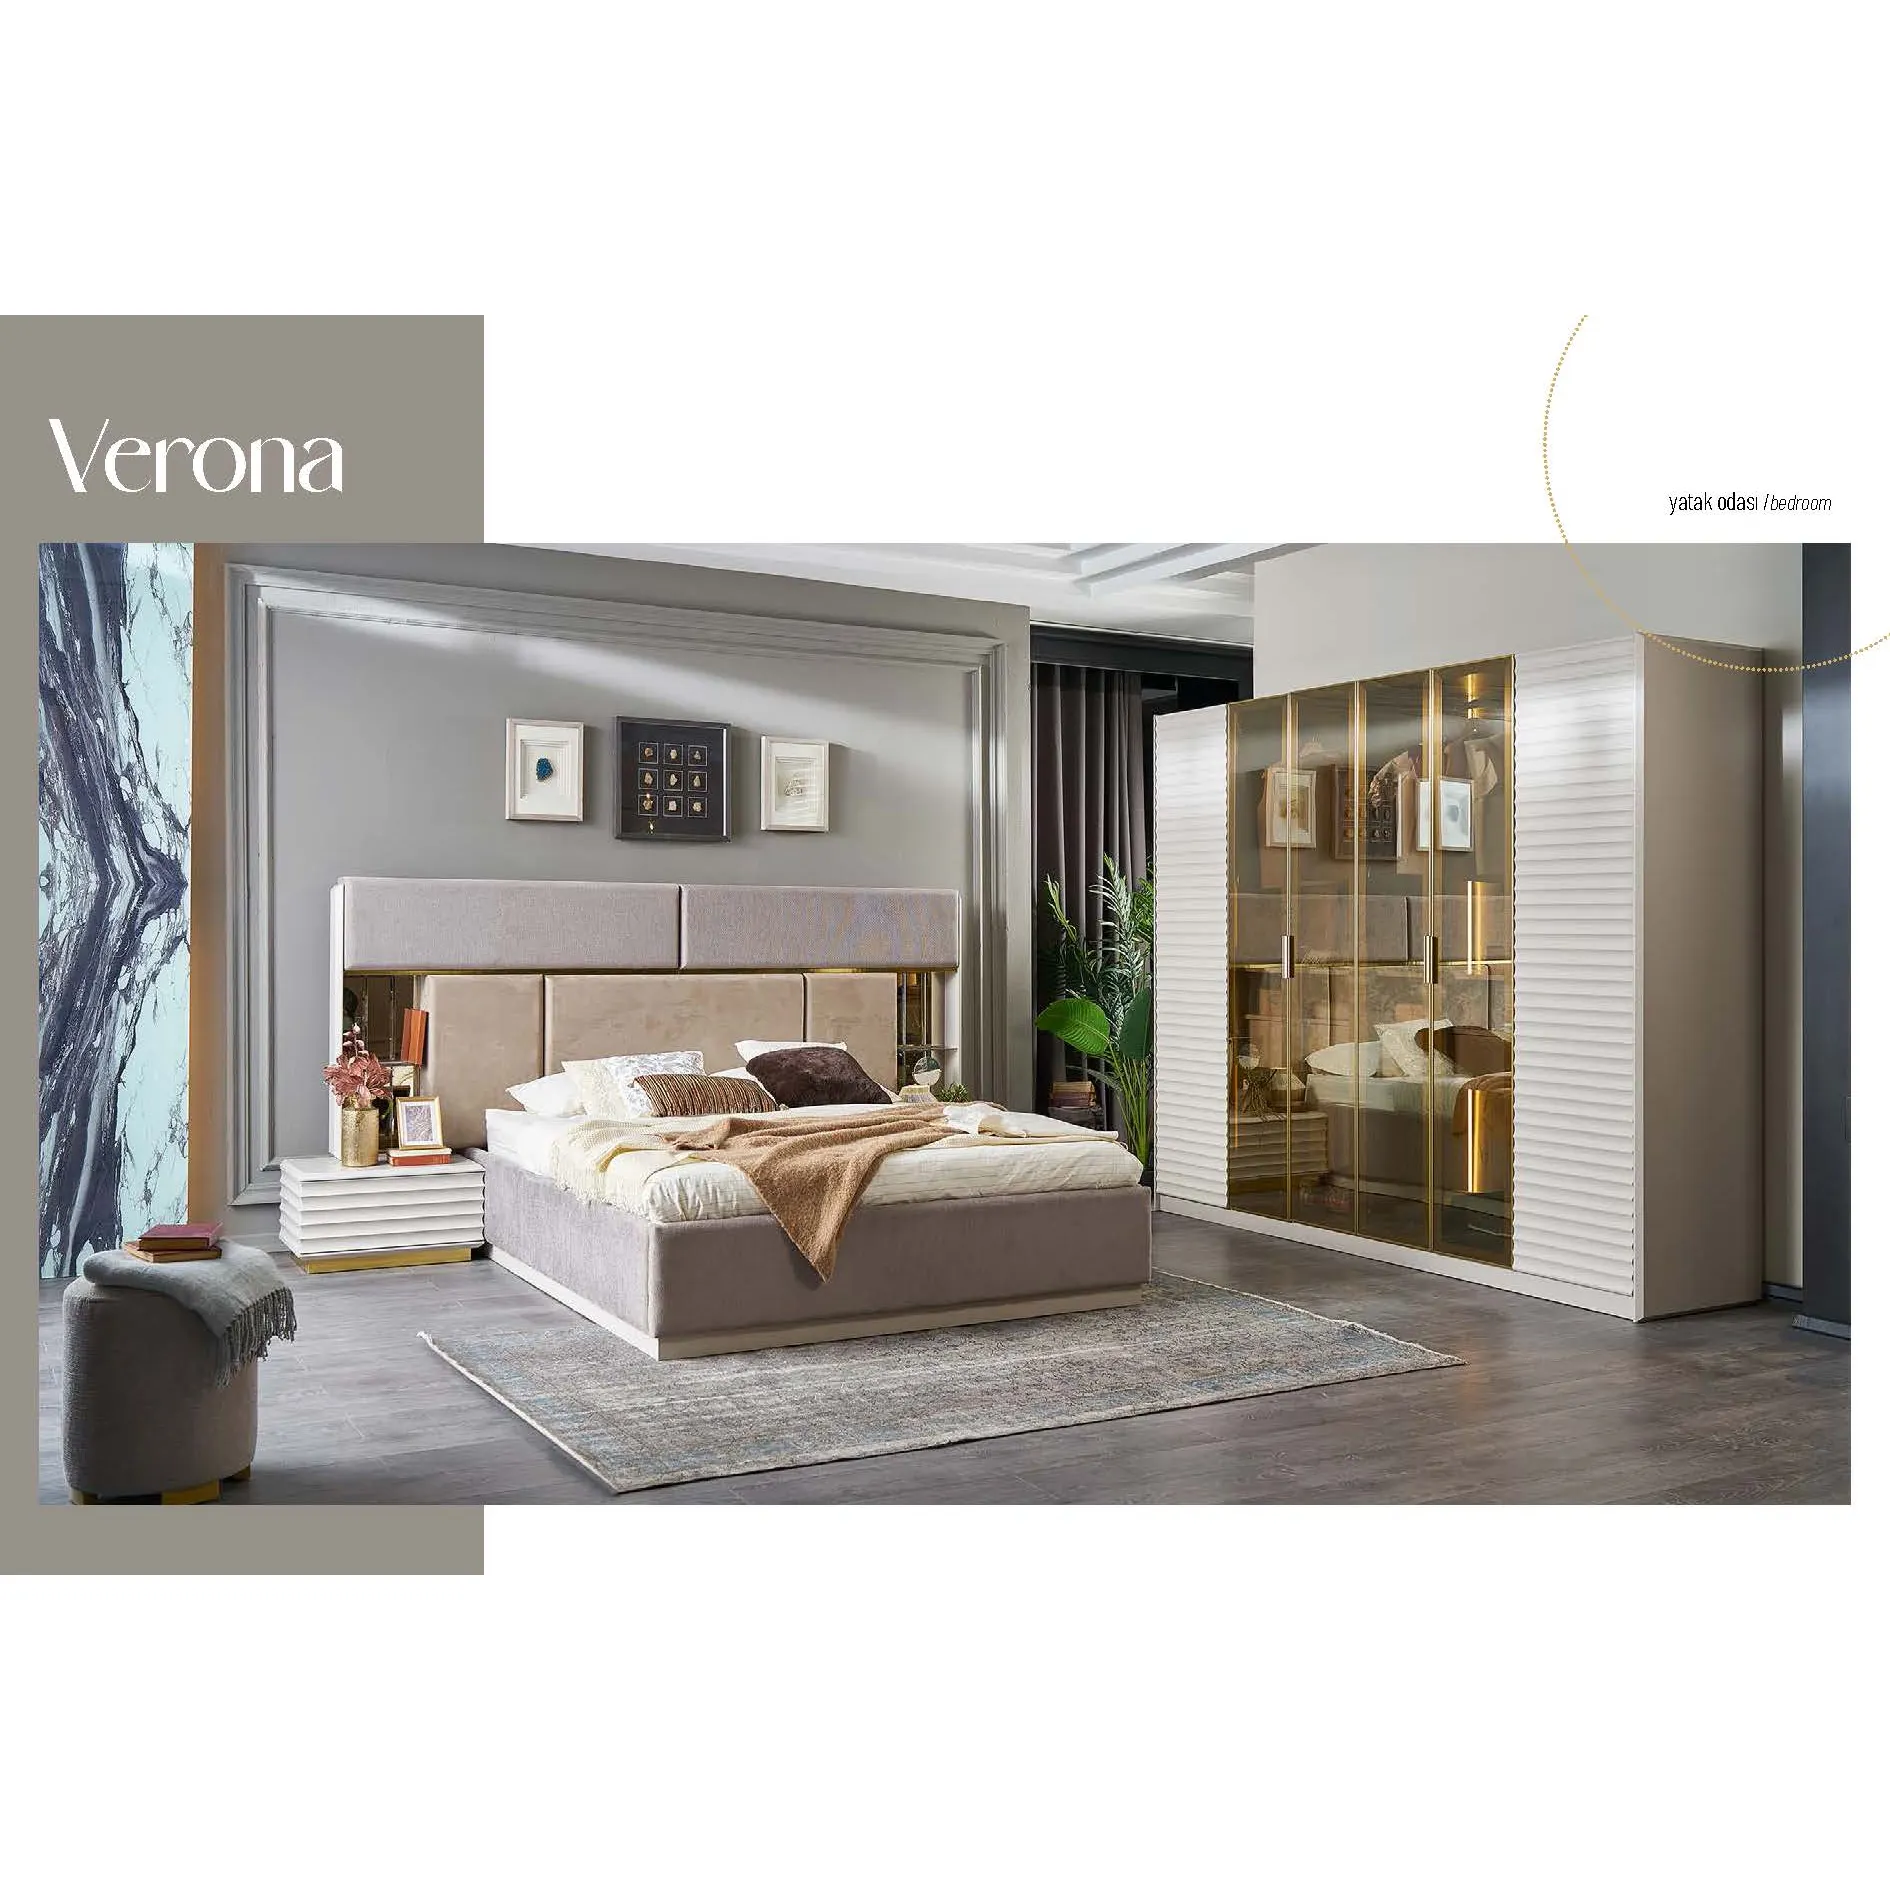 Luxurious Modern Bedroom Furniture Set with Functional Wardrobe made in Turkey Turkish Furniture Mirror Headboard Glossy White